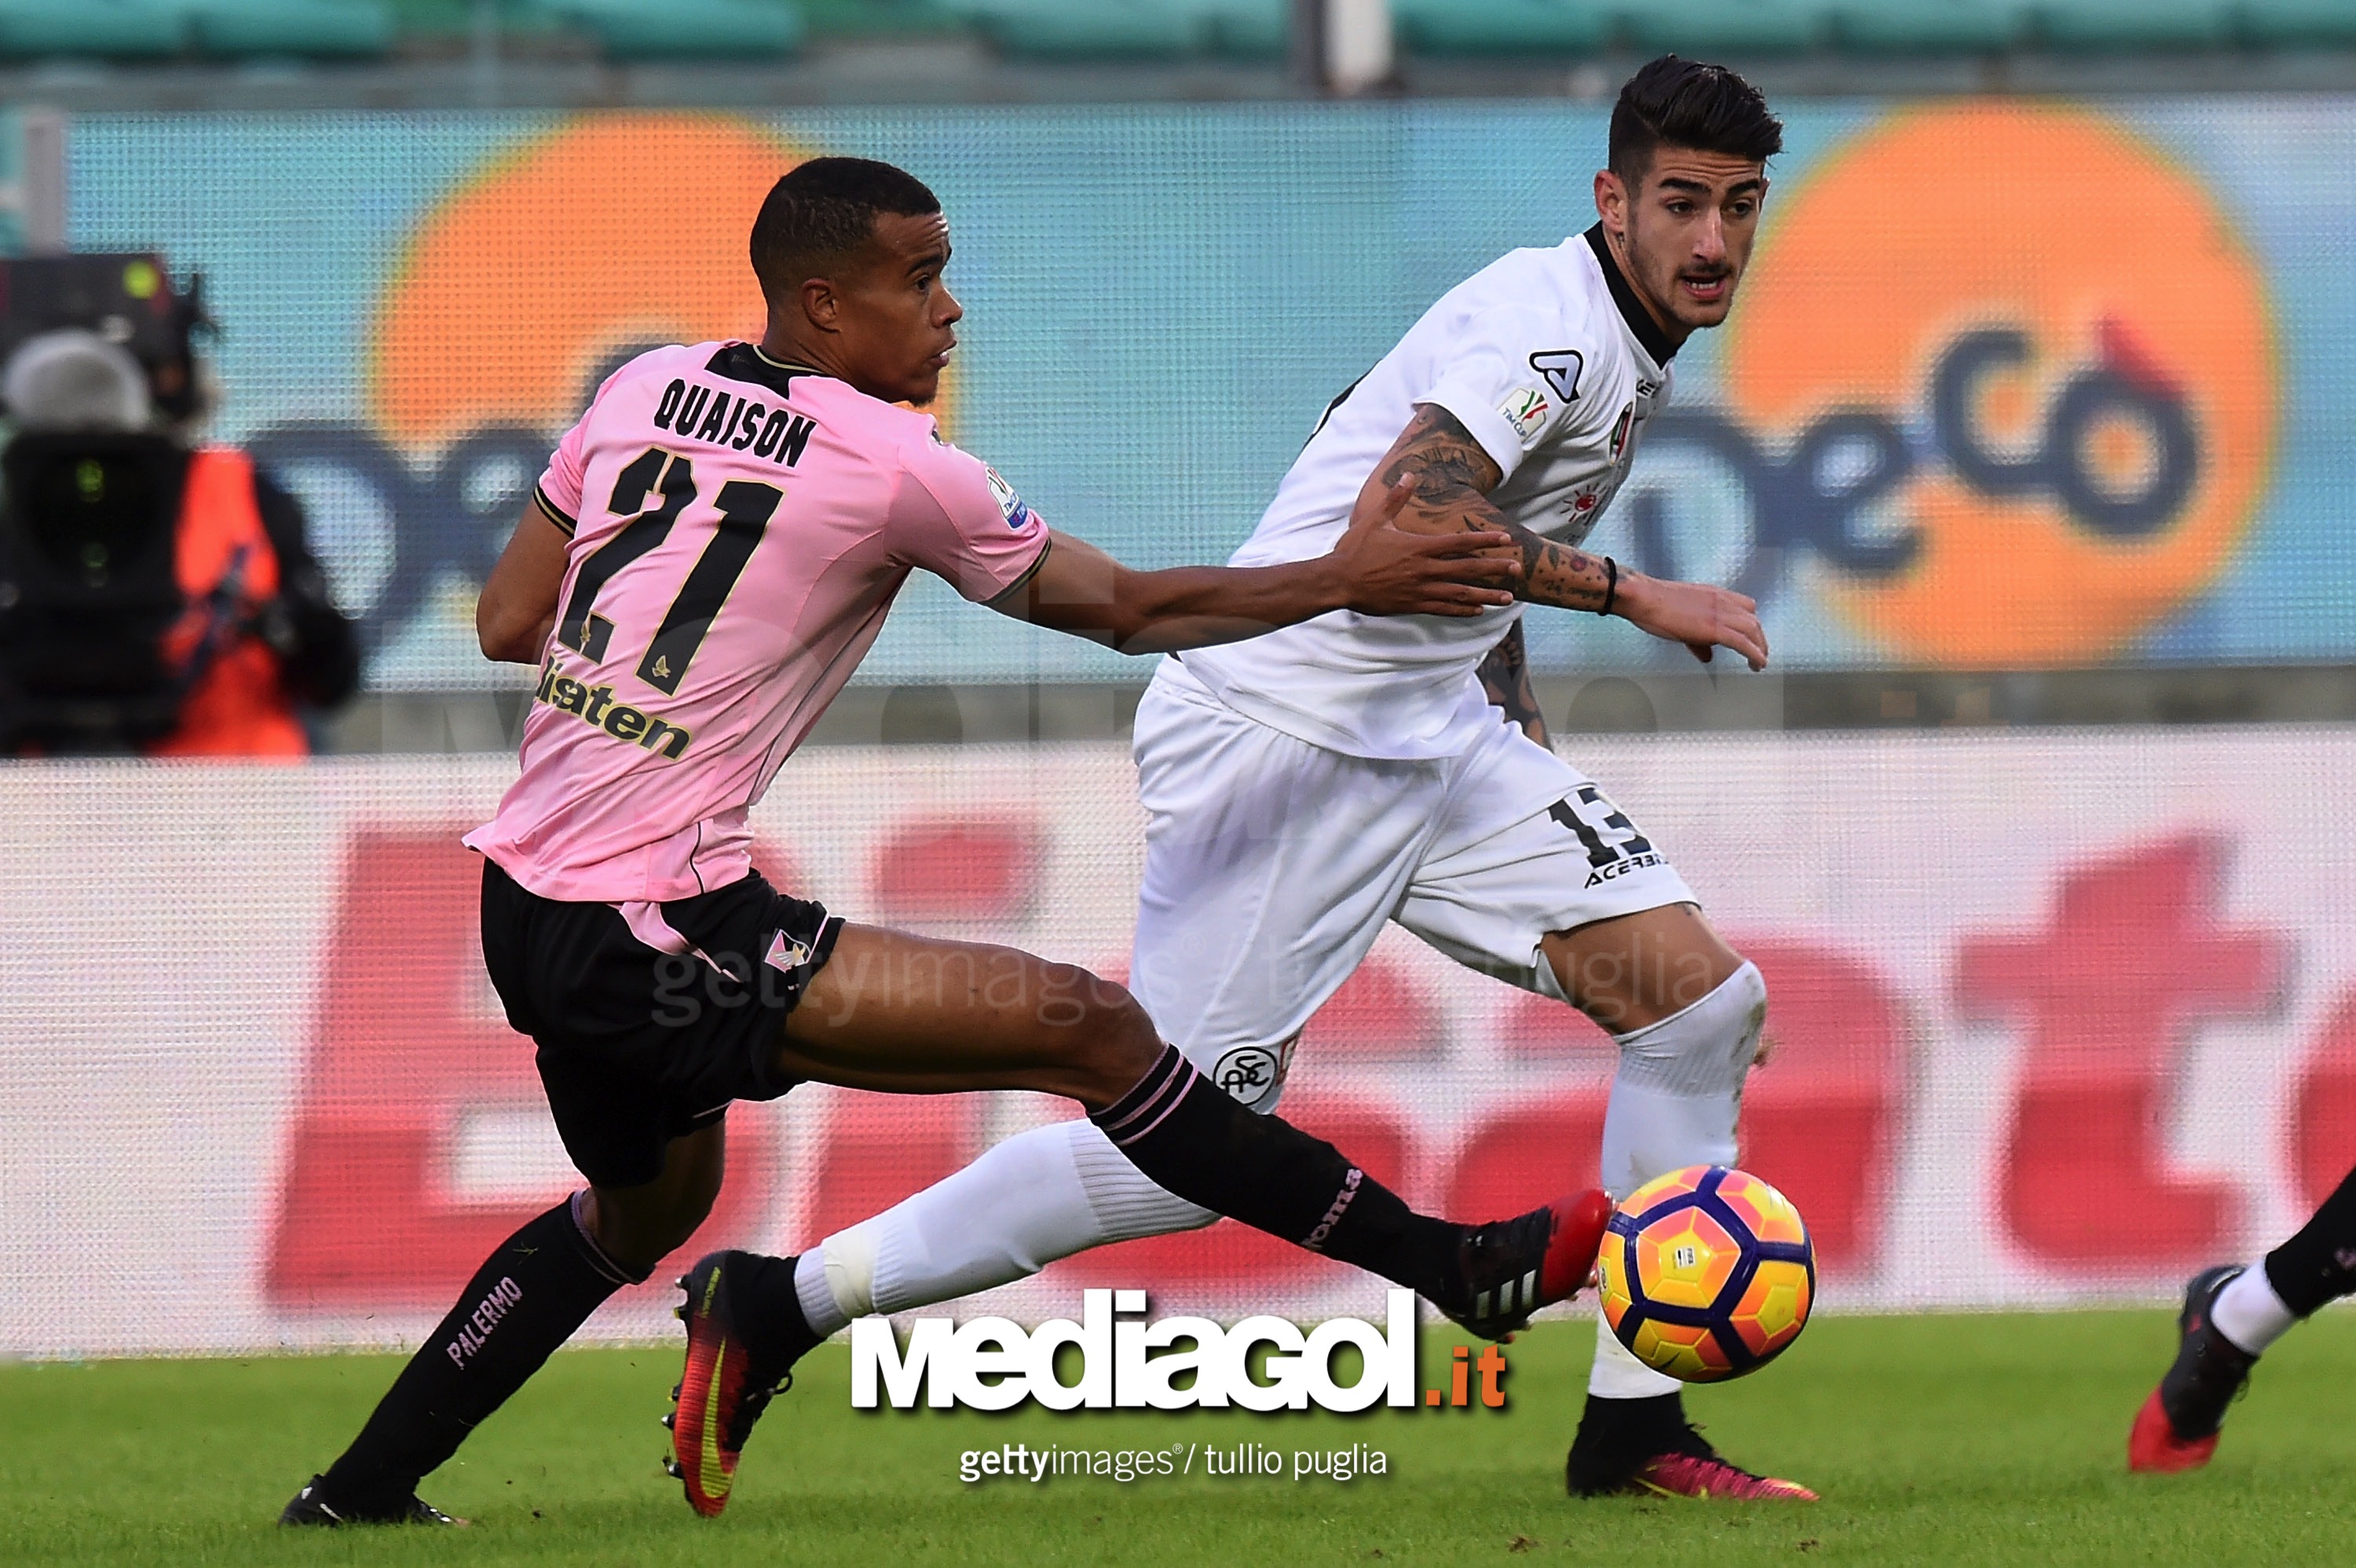 US Citta di Palermo v AC Spezia - TIM Cup